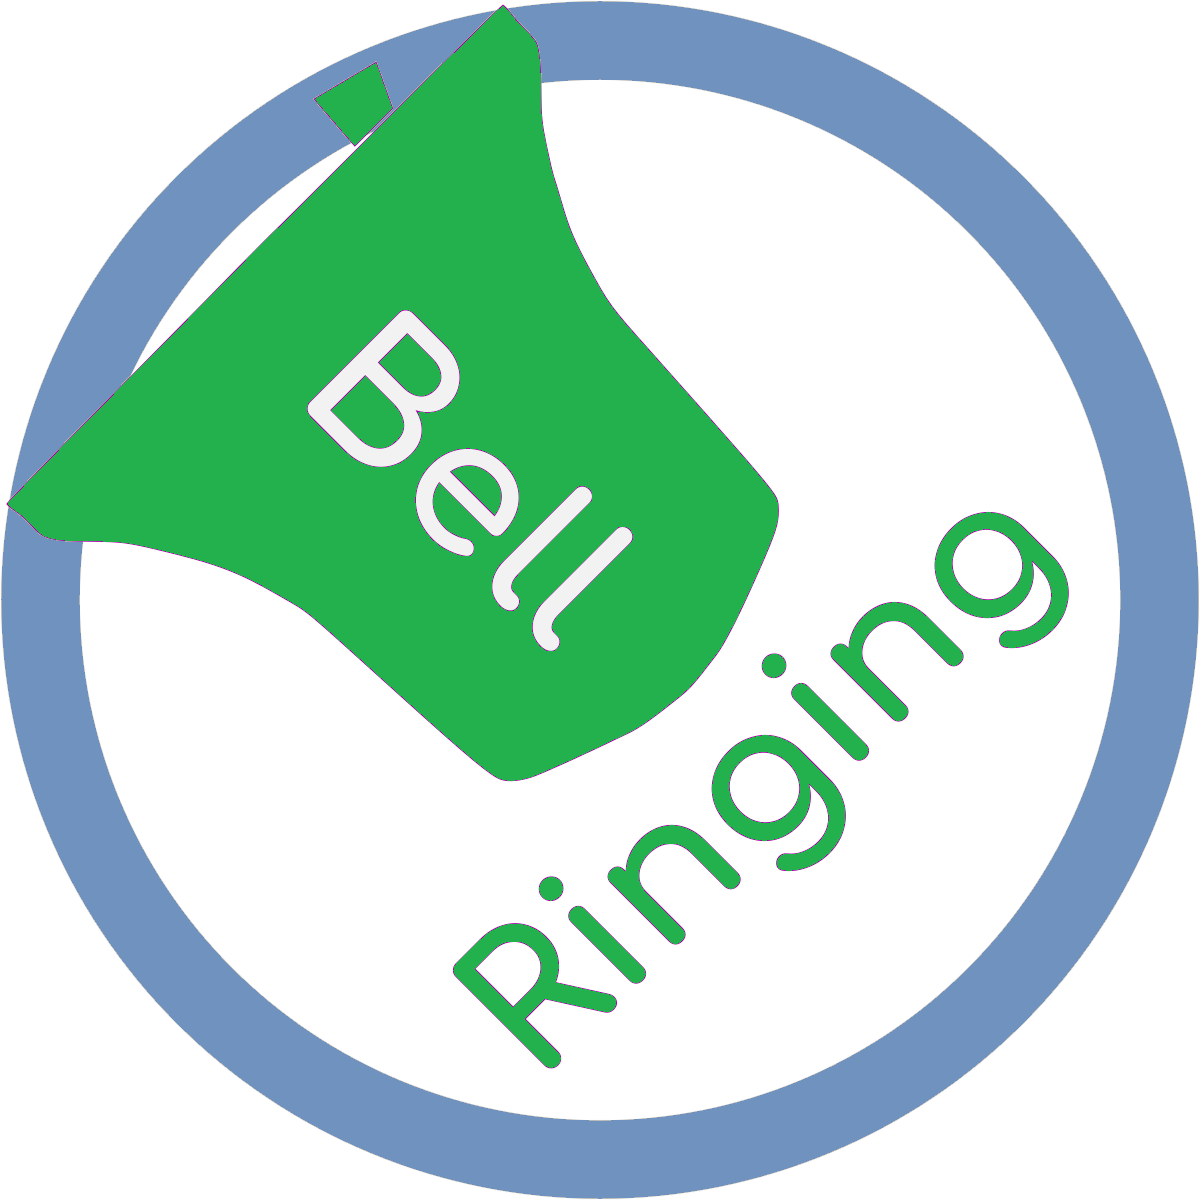 CCCBR bellringing logo green 2